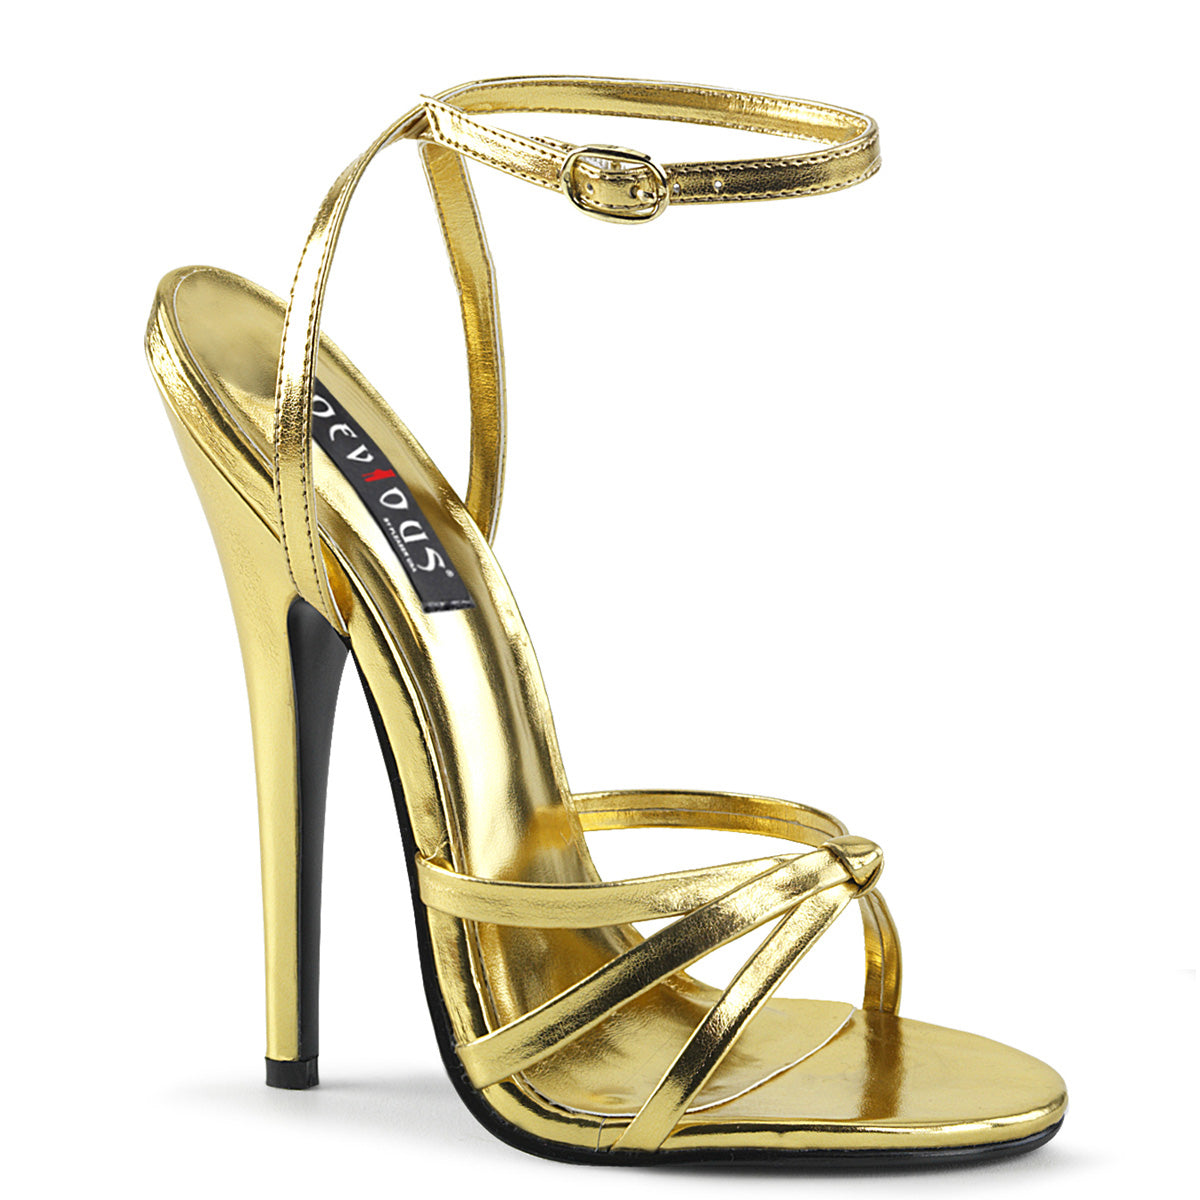 DOMINA-108 Gold 6 Inch Heel Sandals